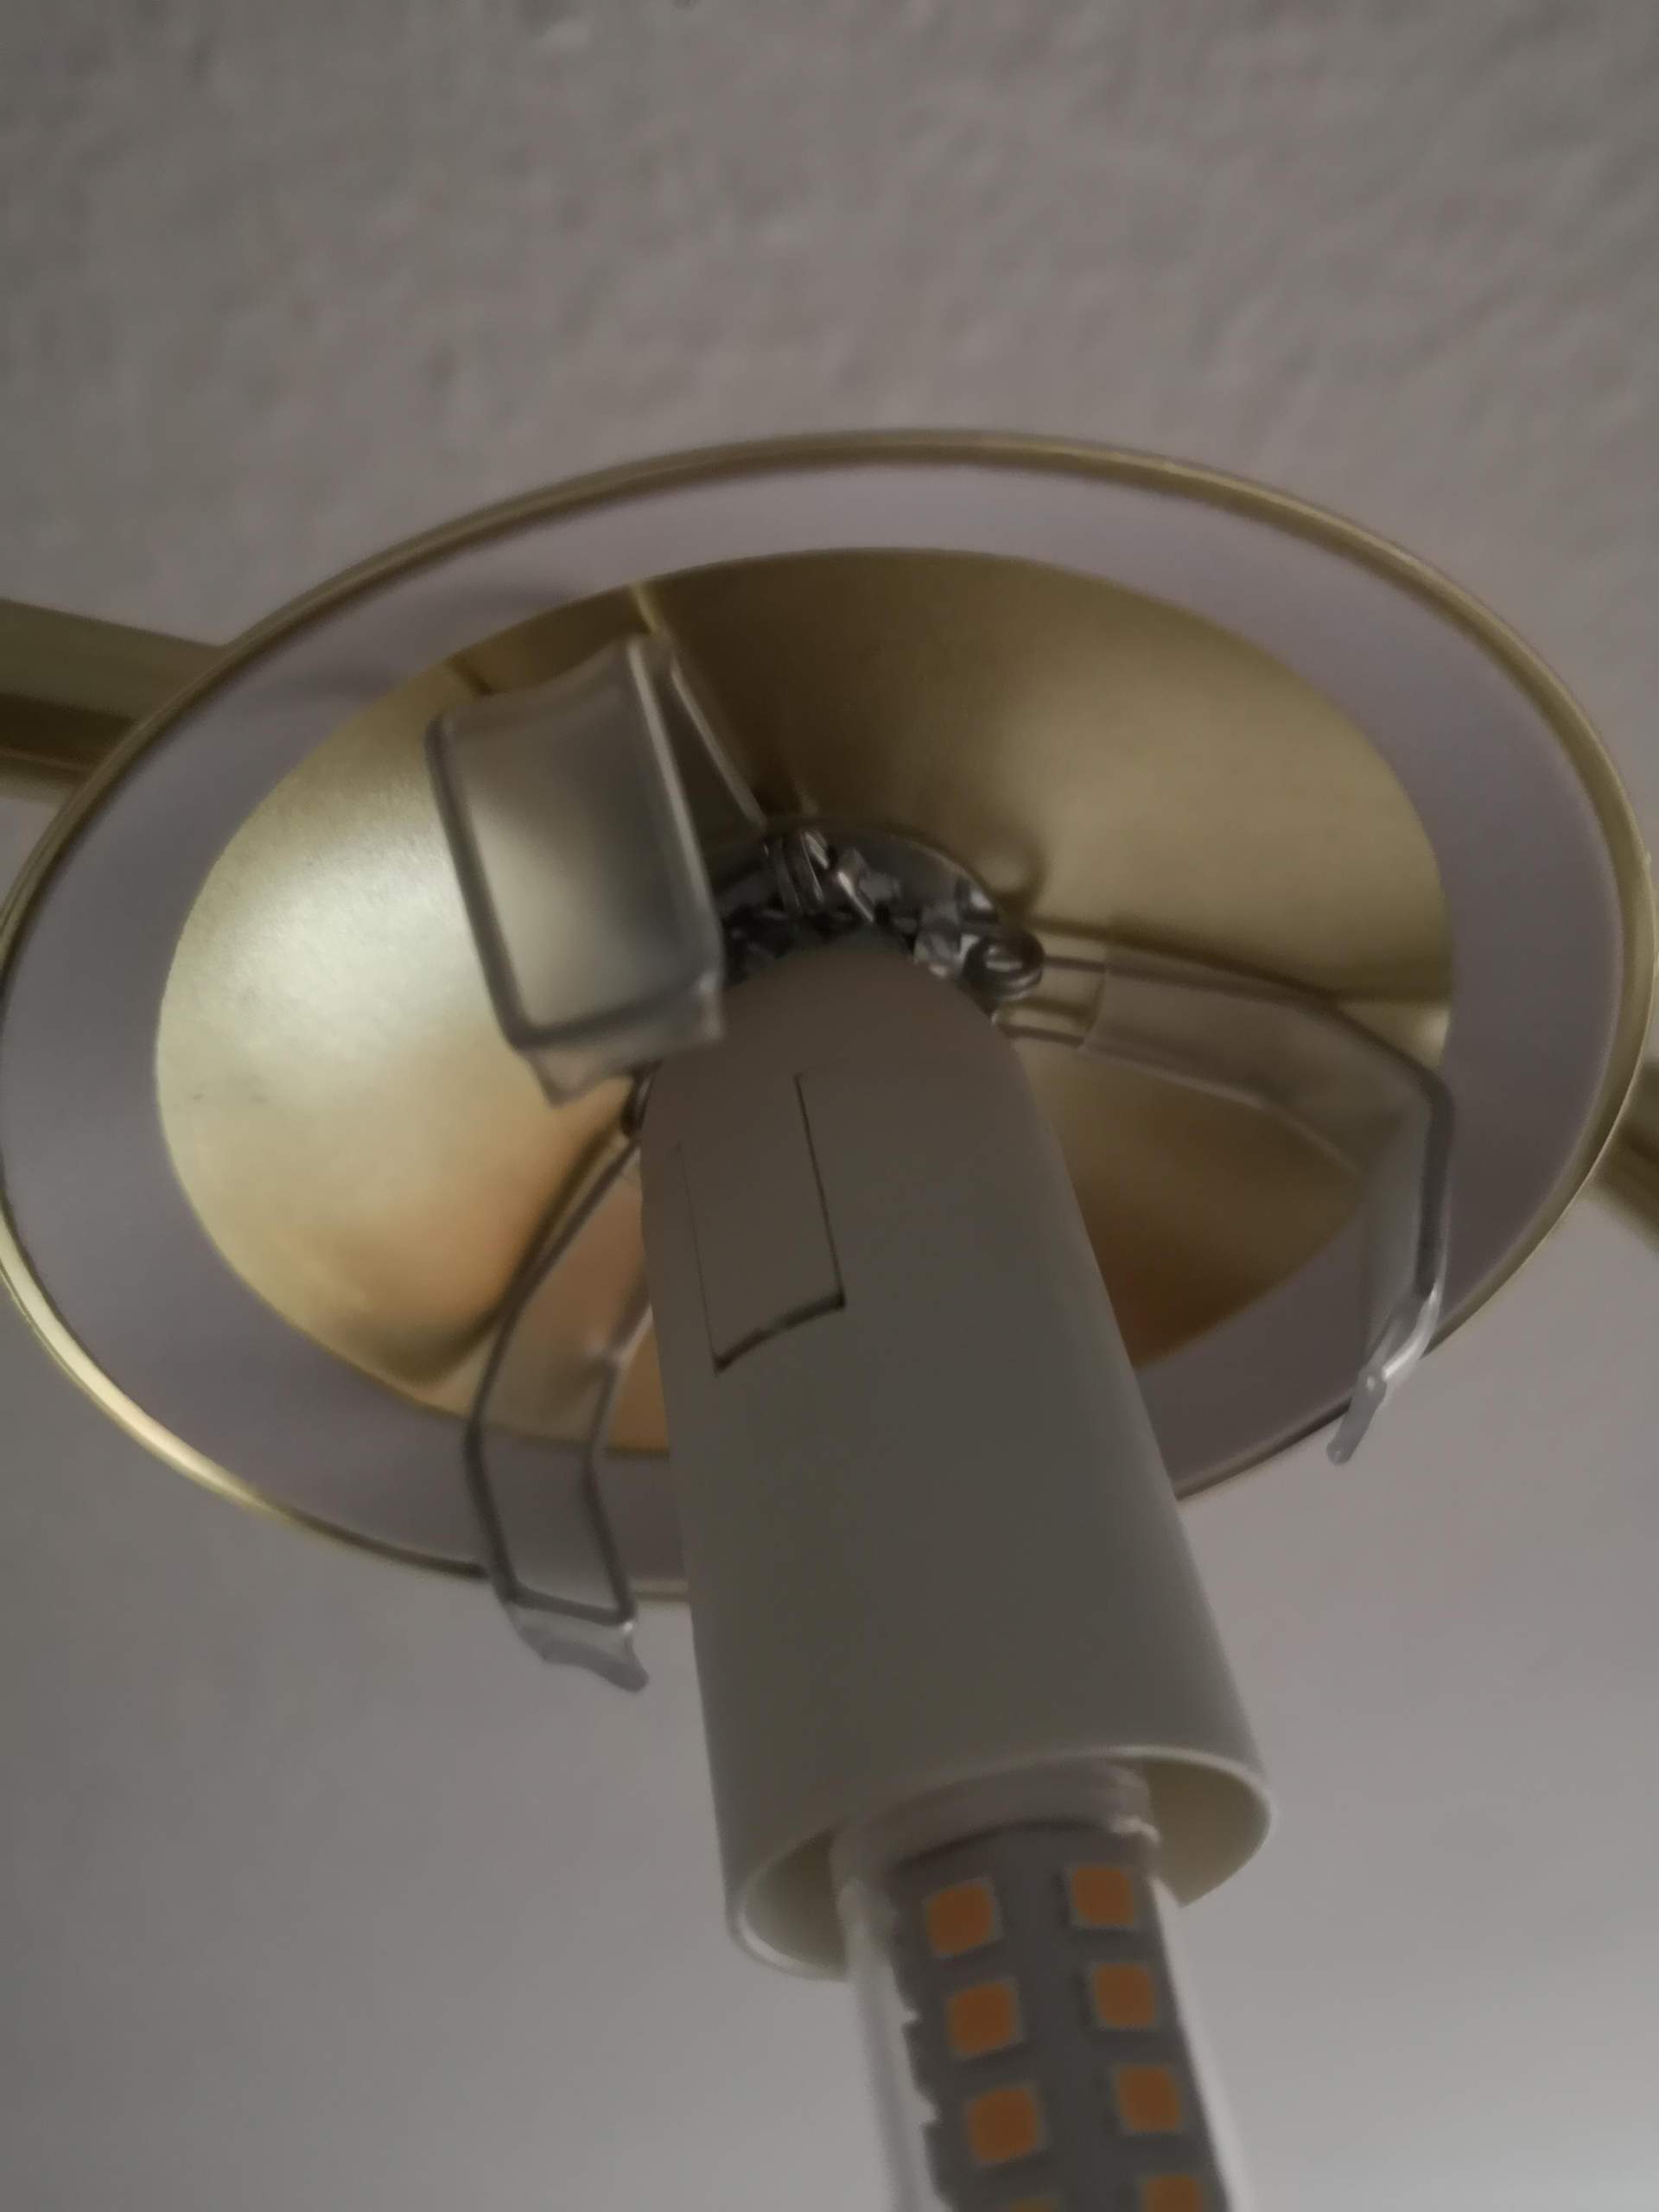 Nordlux Grant Deckenlampe Montage Hilfe? (Technik, Strom, Elektrik)